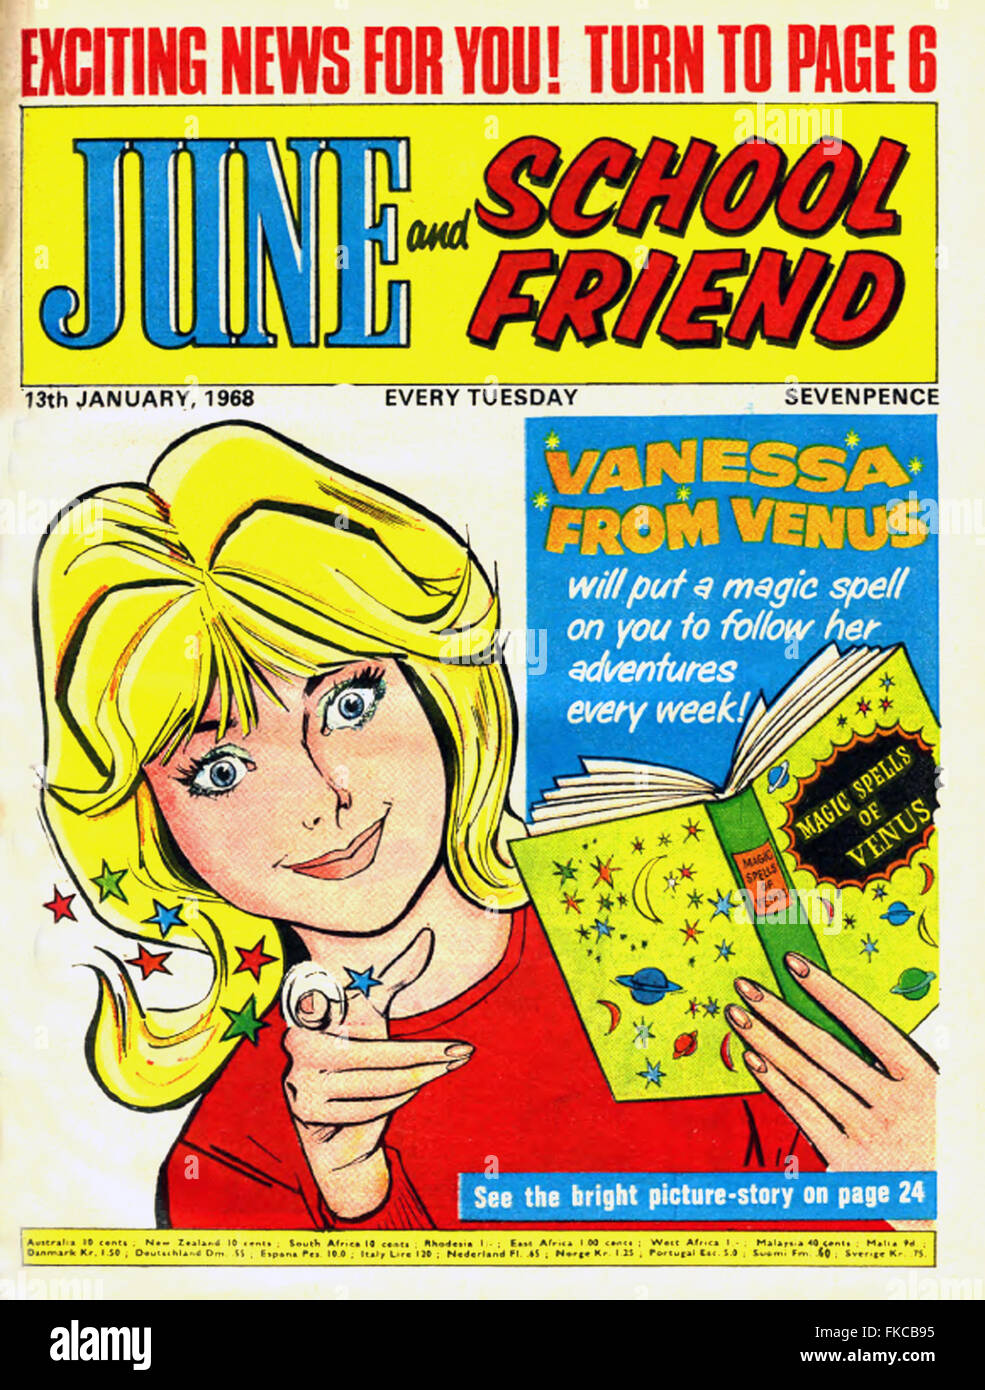 1960s UK School Friend Comic Cover Stock Photo